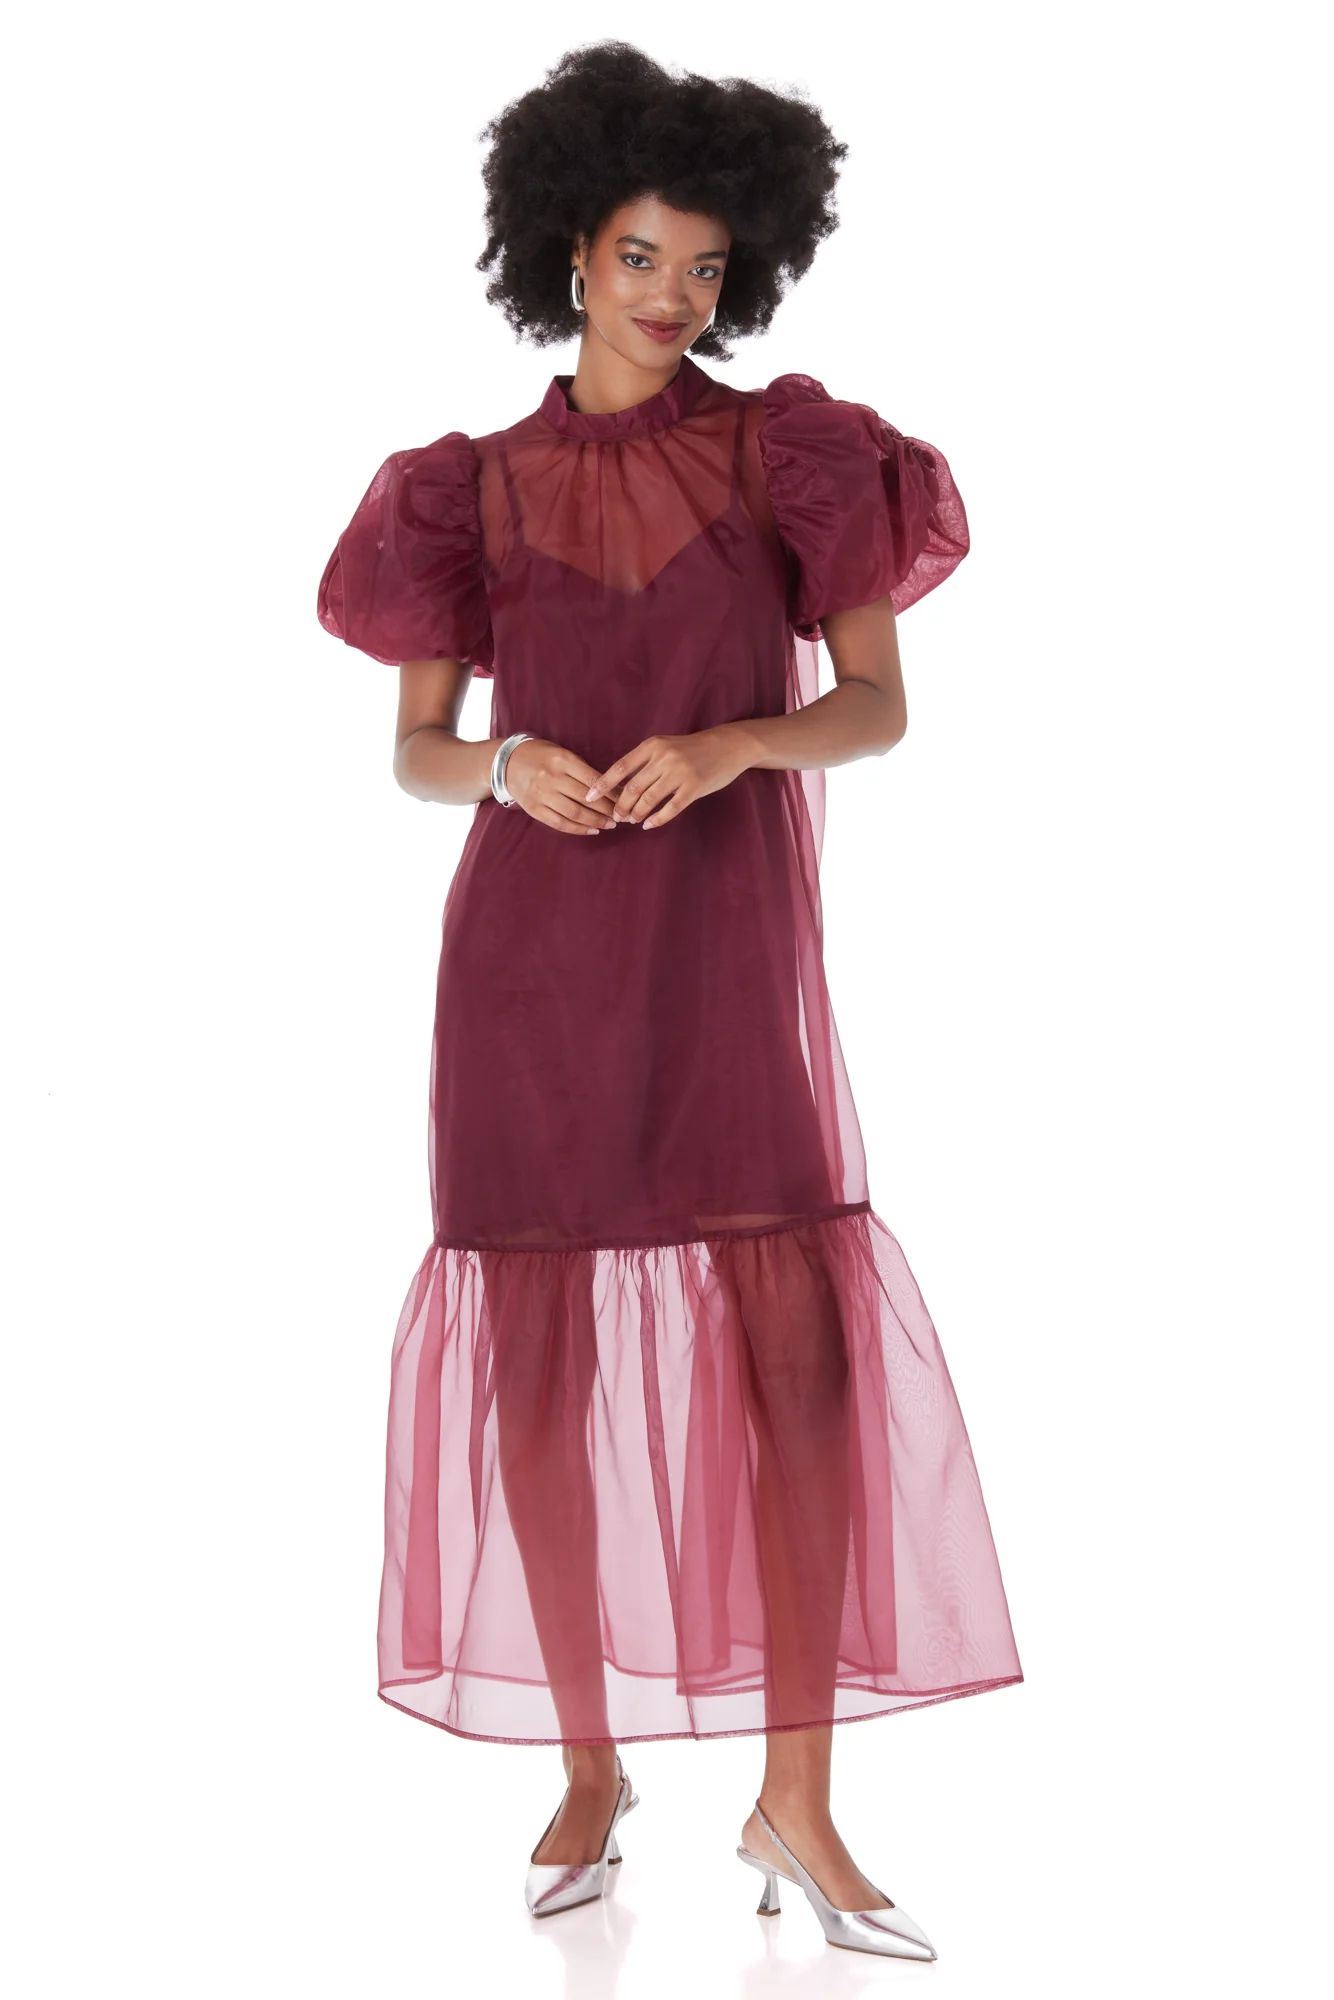 Loretta Dress in Cabernet | CROSBY by Mollie Burch | CROSBY by Mollie Burch